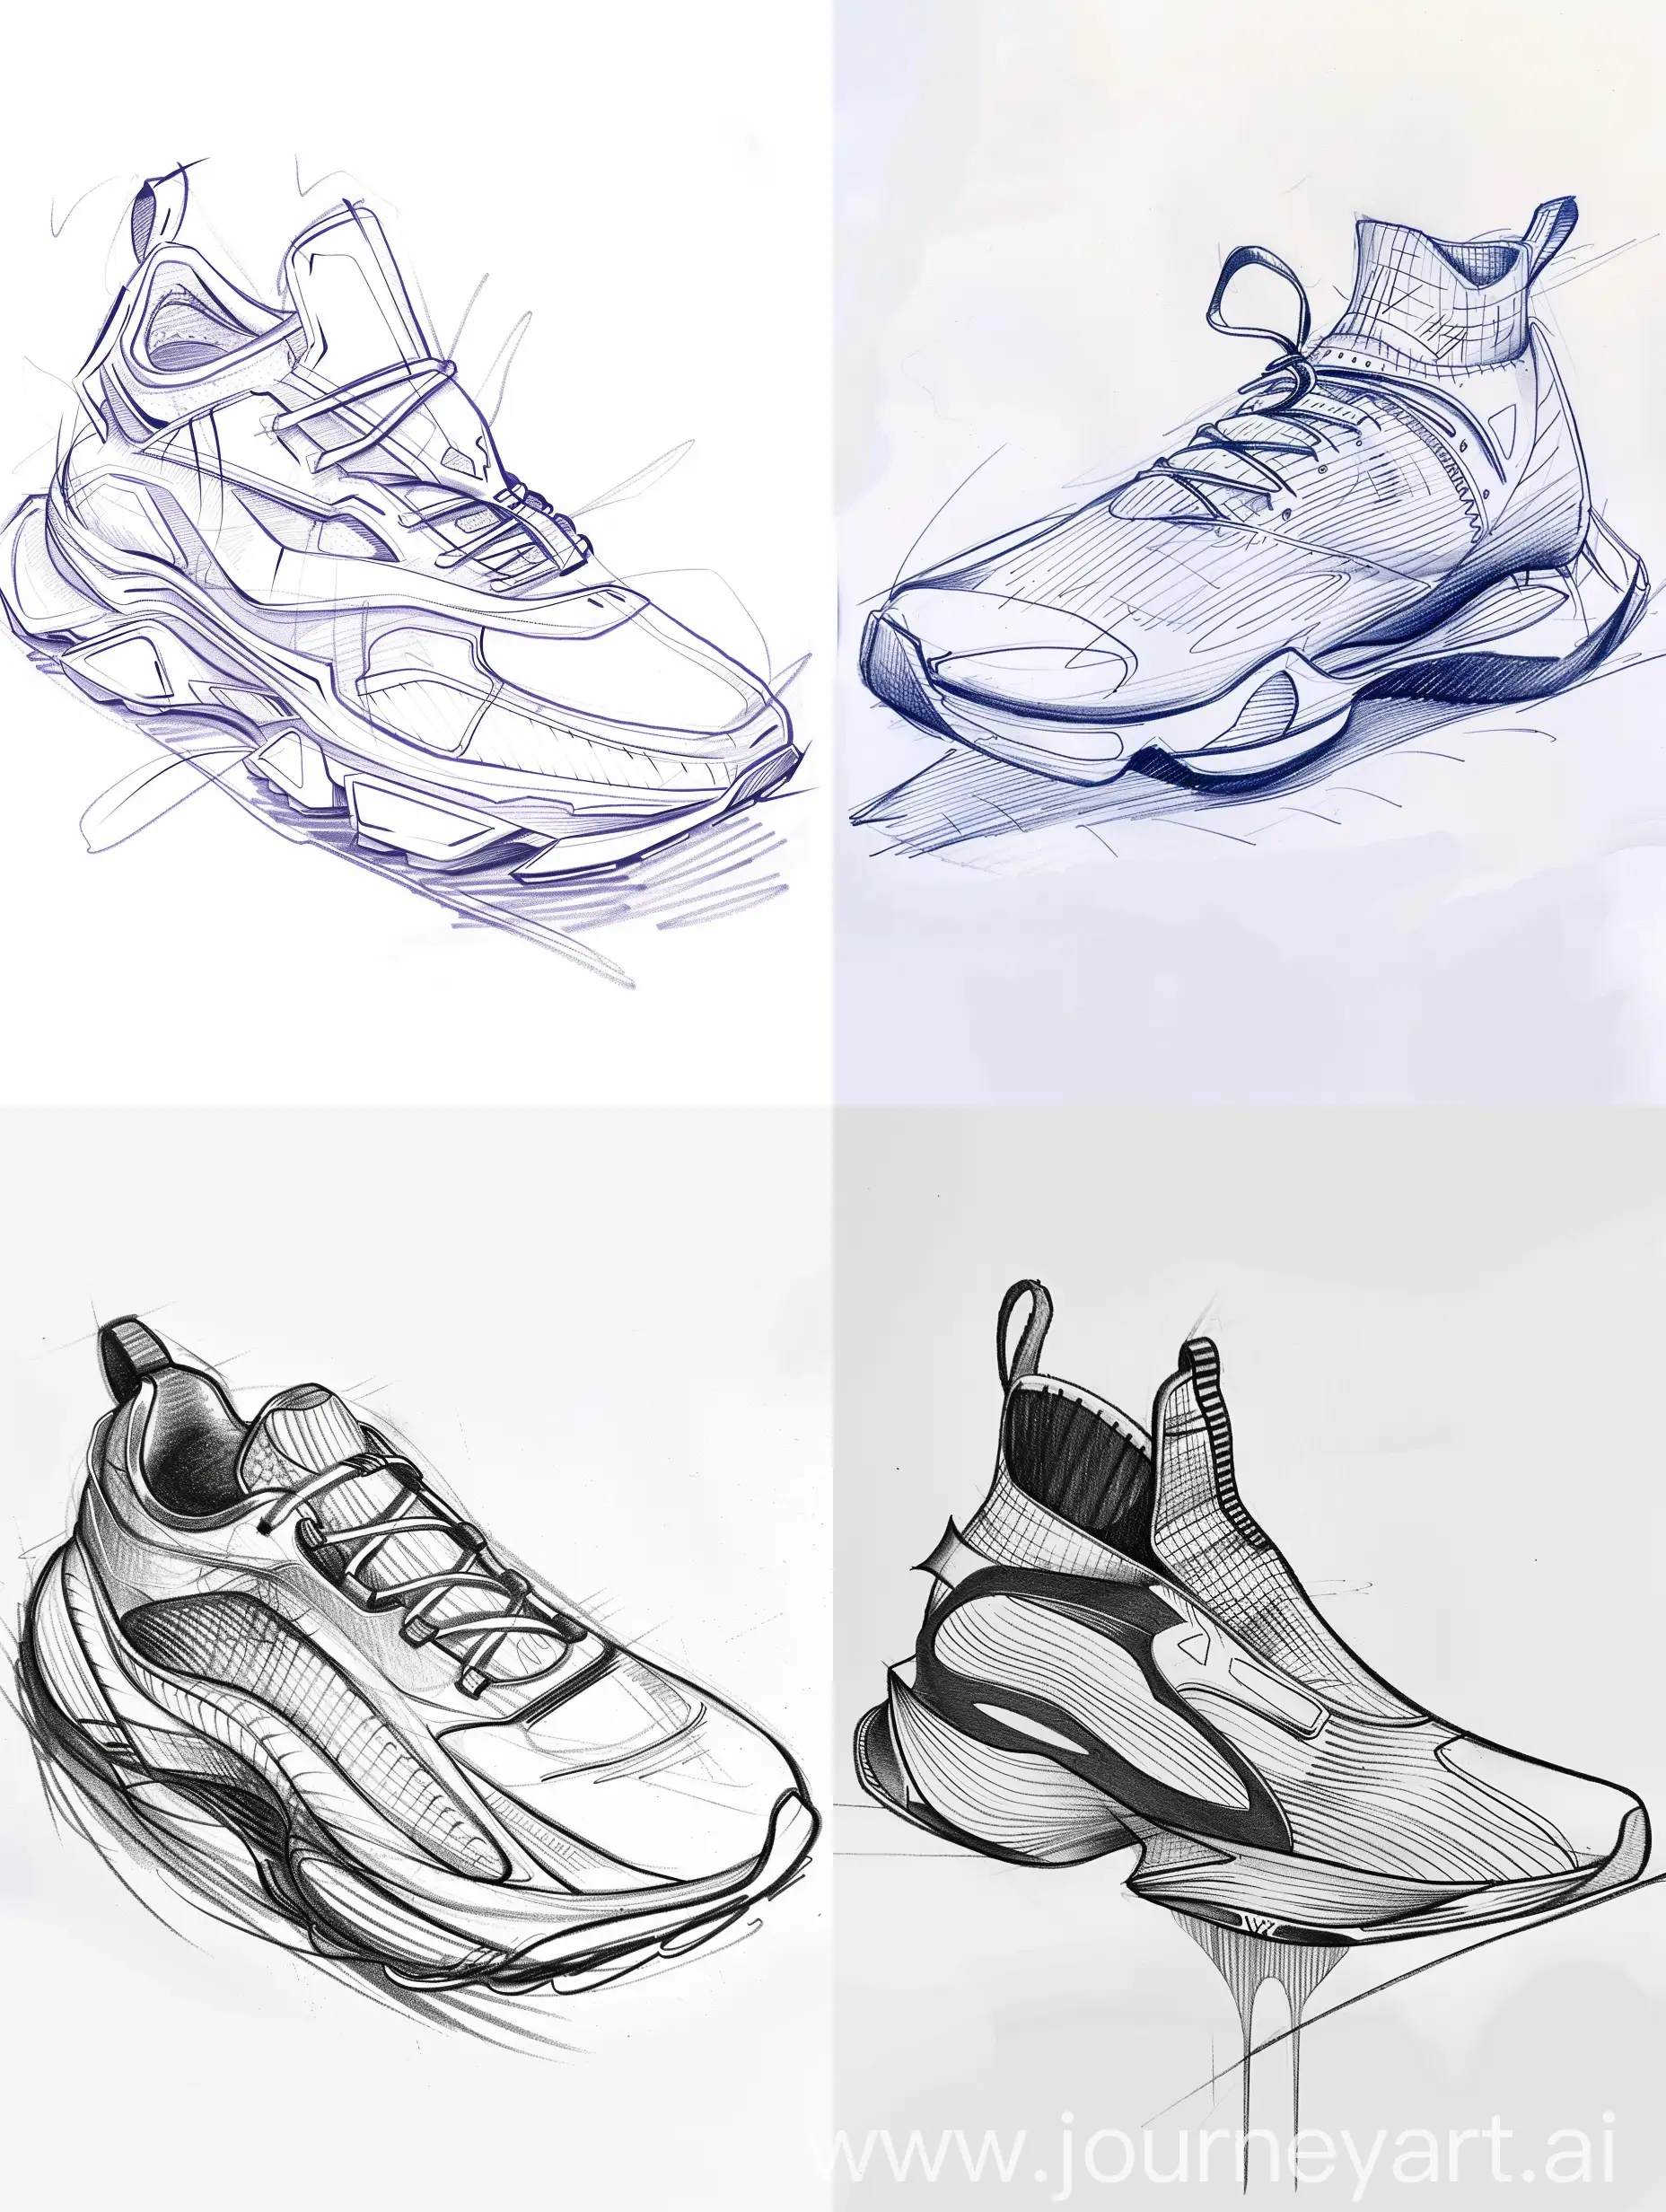 minimalist futuristic shoes sketch design, on a white background
